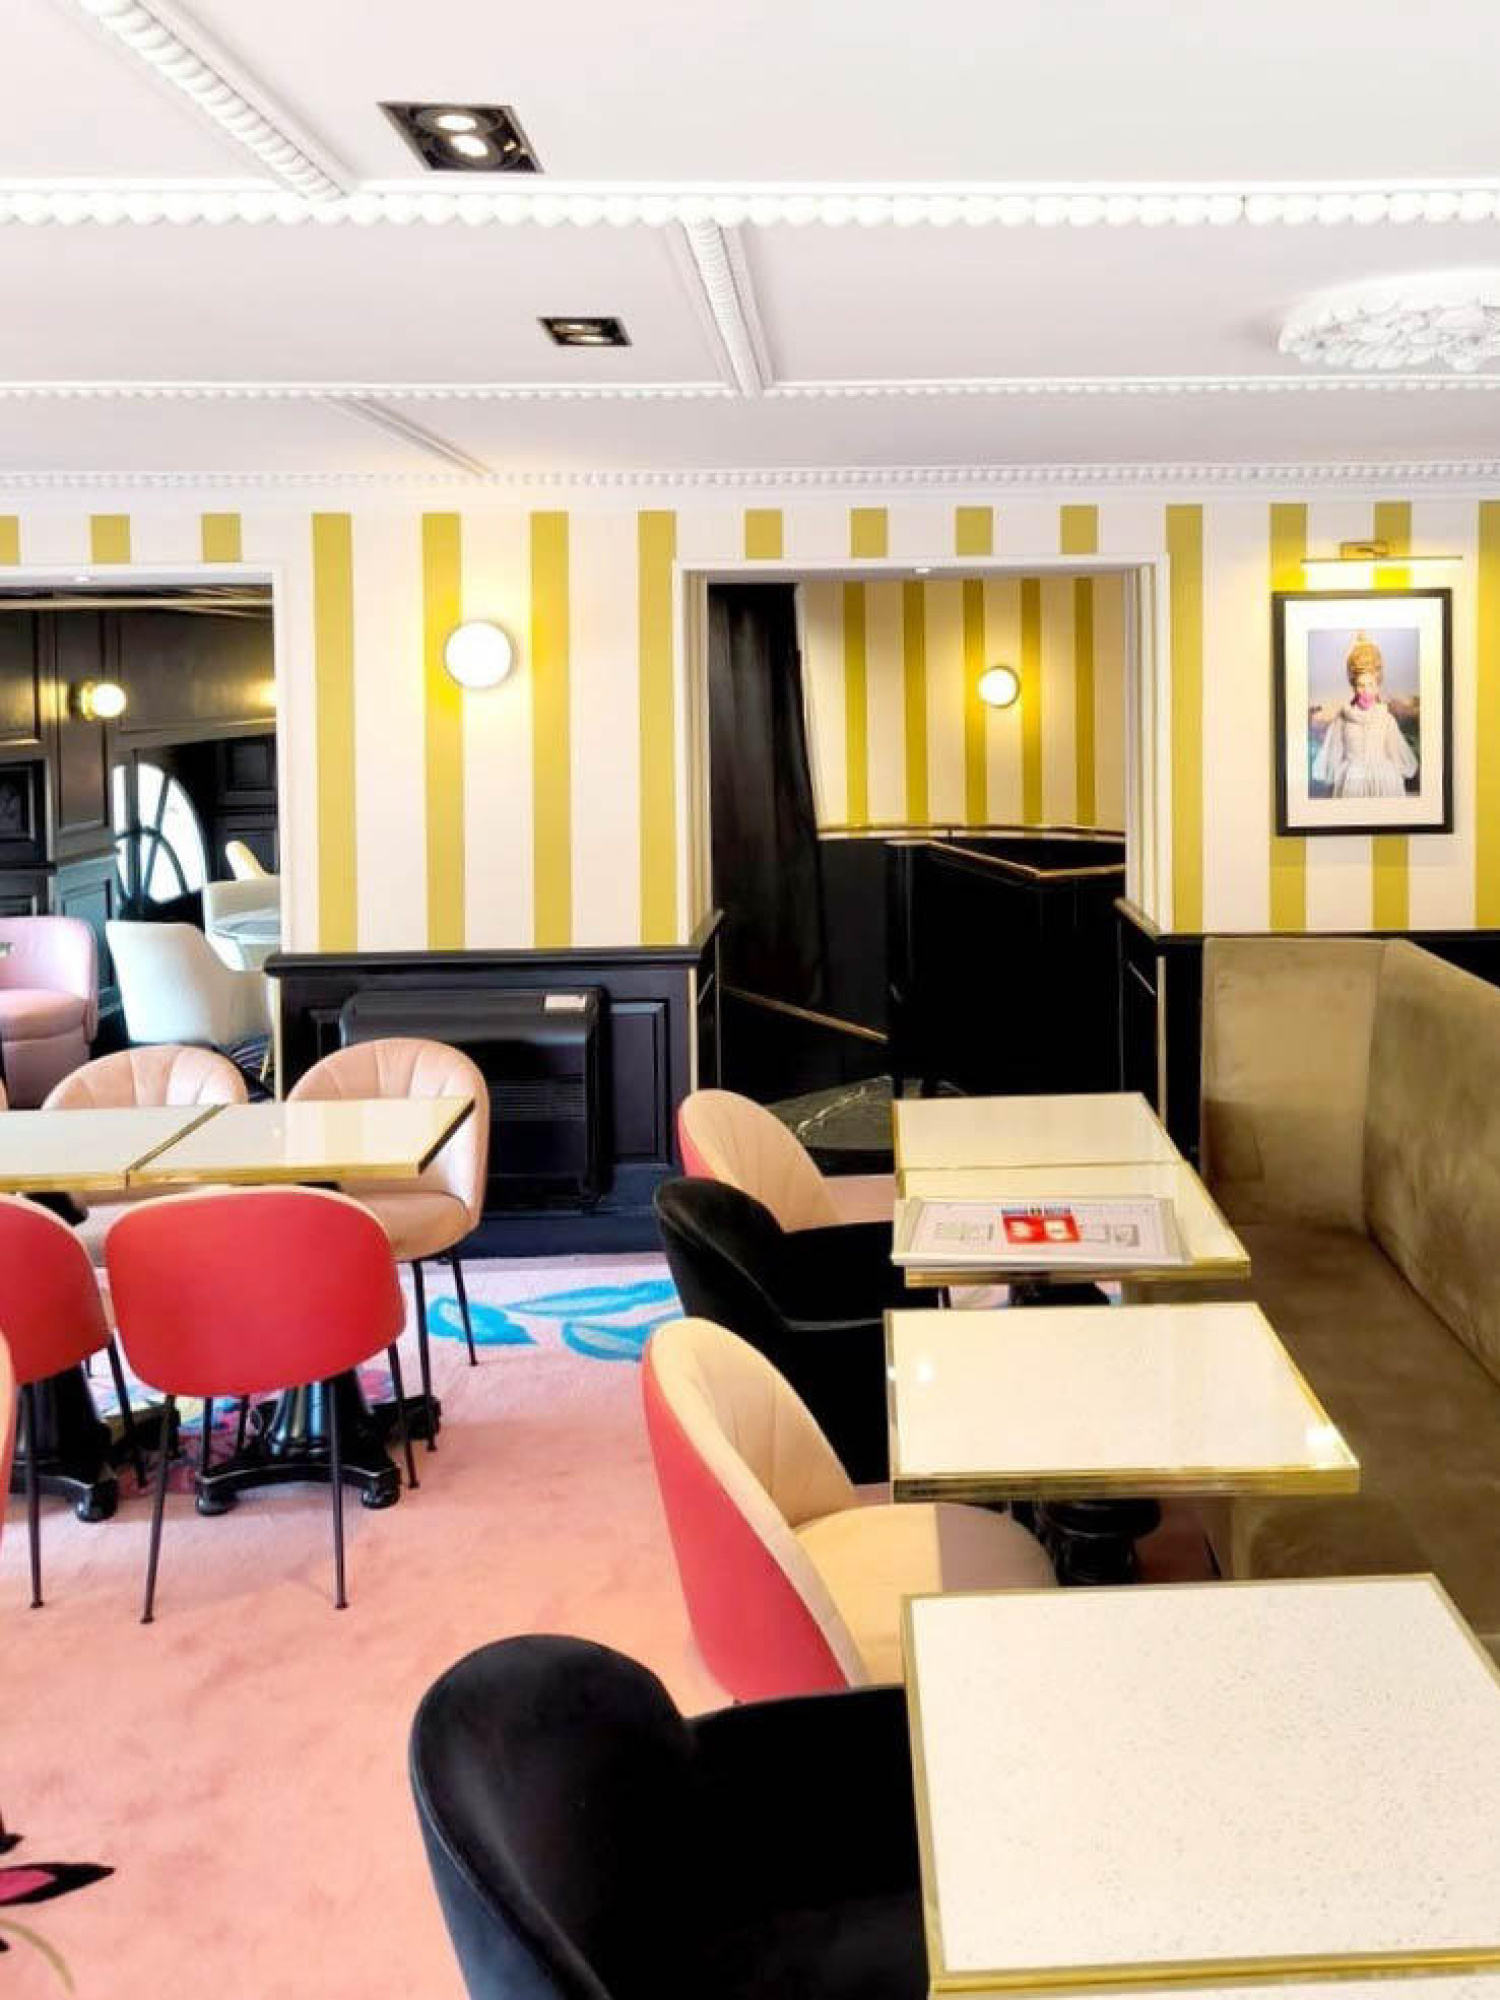 RESTAURACJA LE GRAND CAFÉ FOY W NANCY - IBFOR - Your design shop